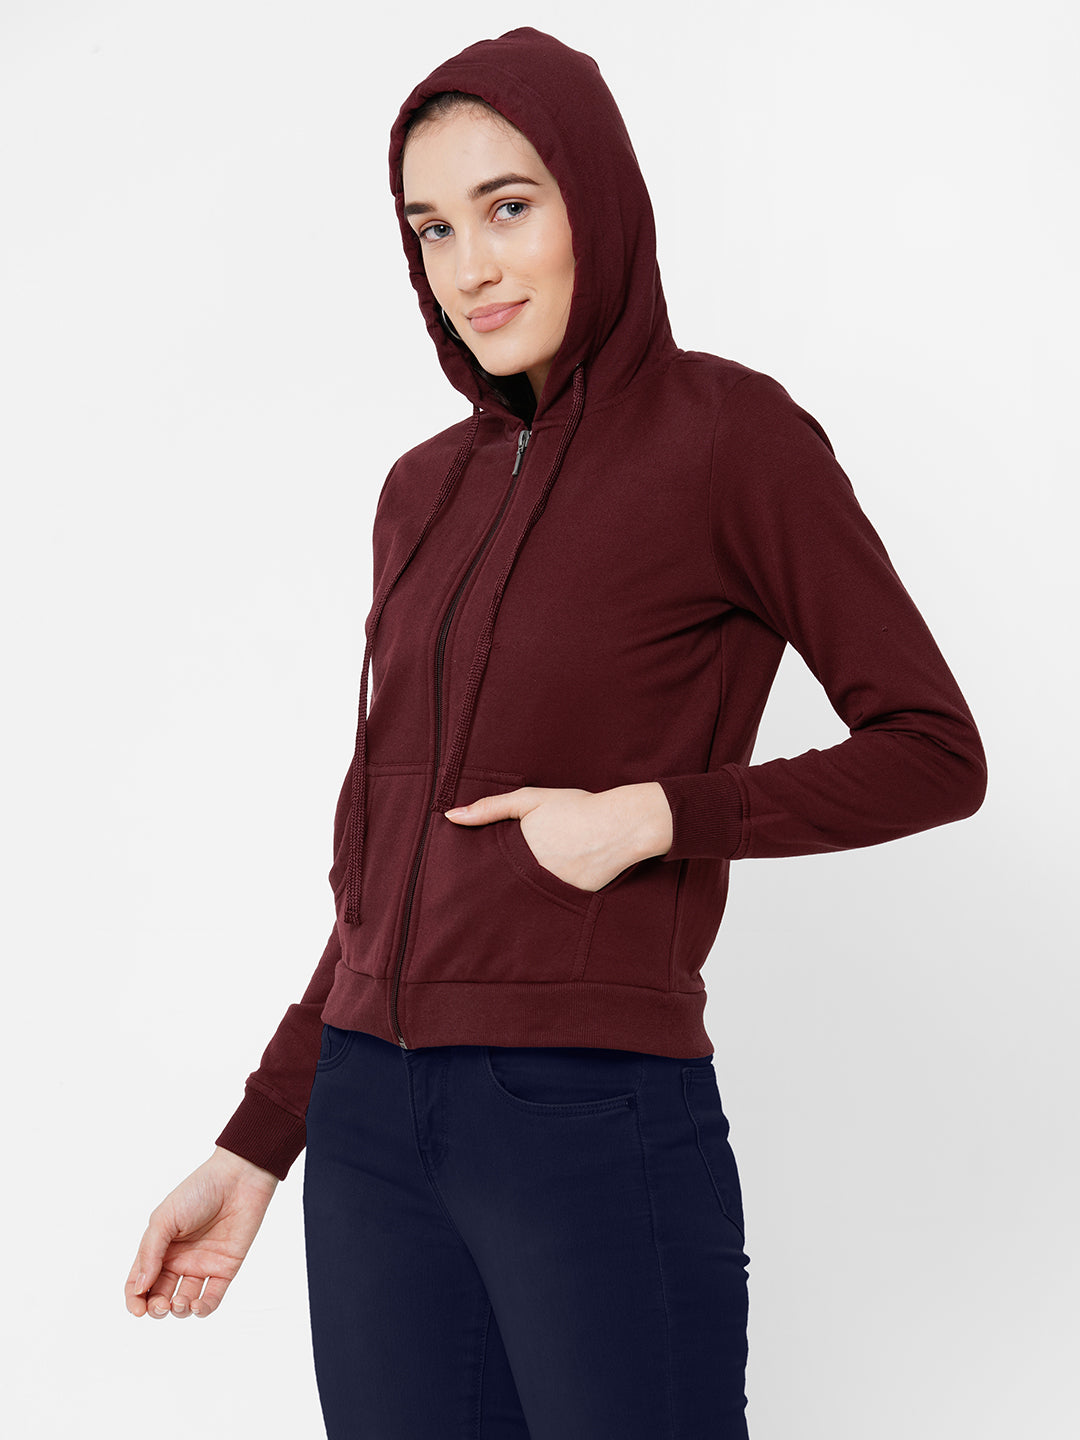 Women Hooded Full Sleeves With Pockets Sweatshirt